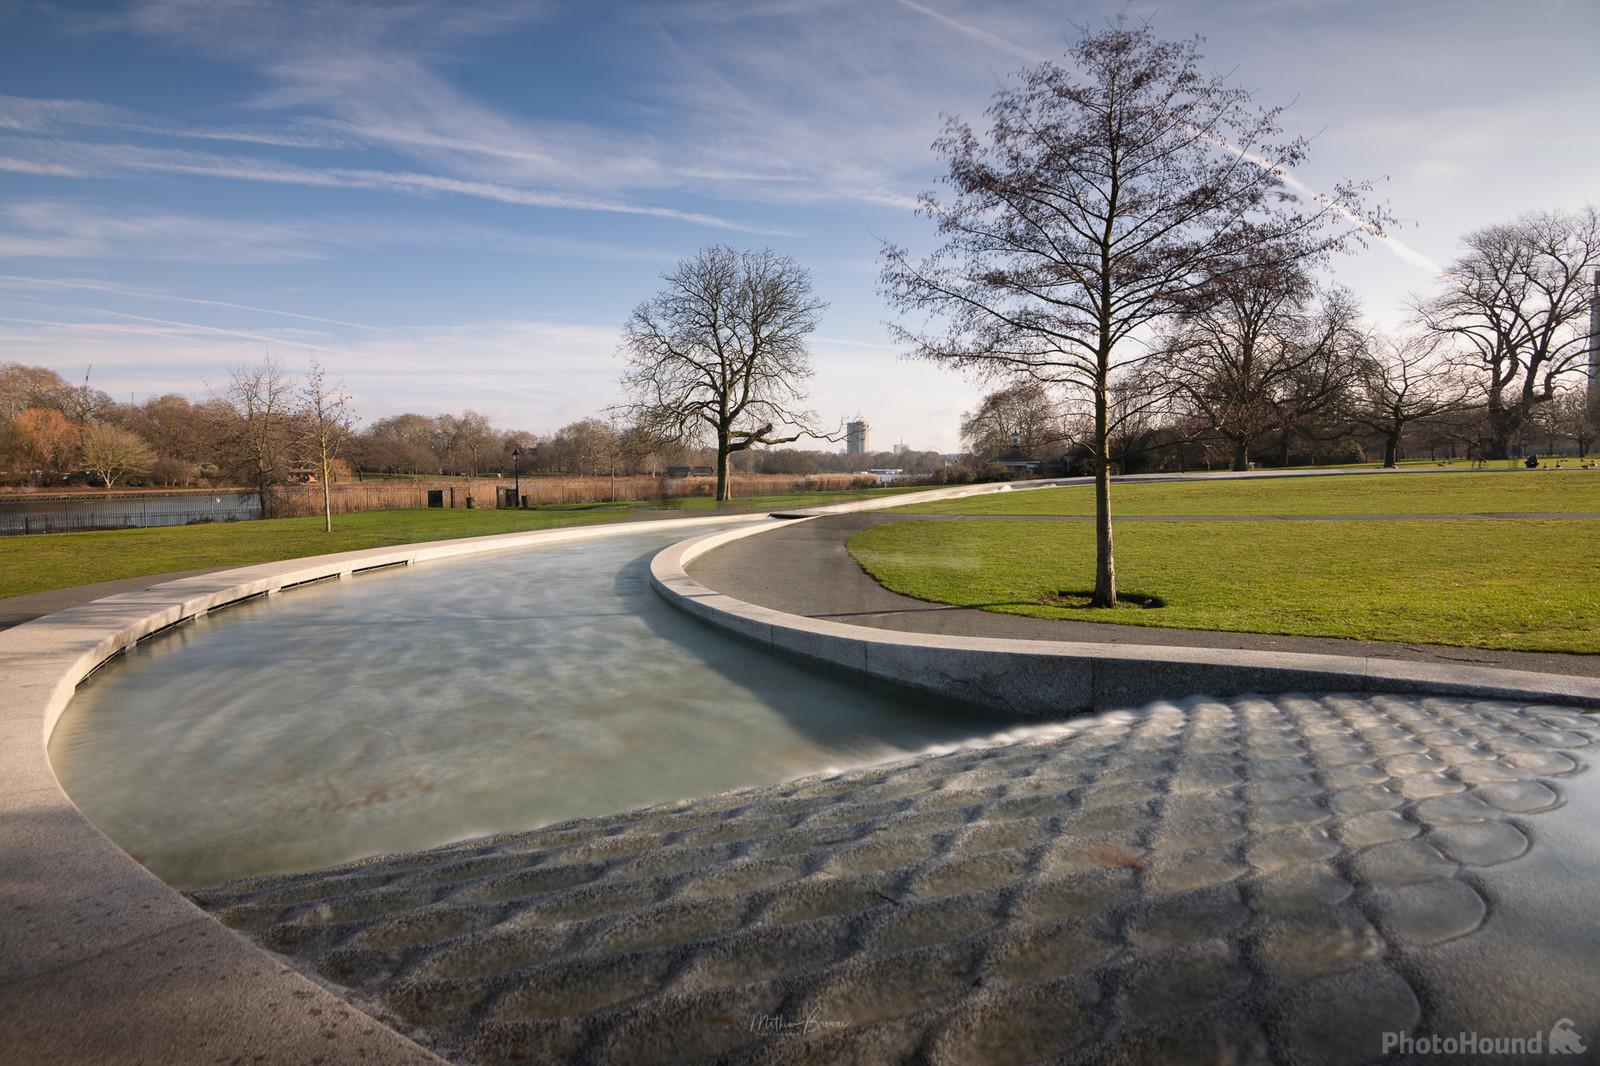 Image of Princess Diana Memorial Fountain by Mathew Browne